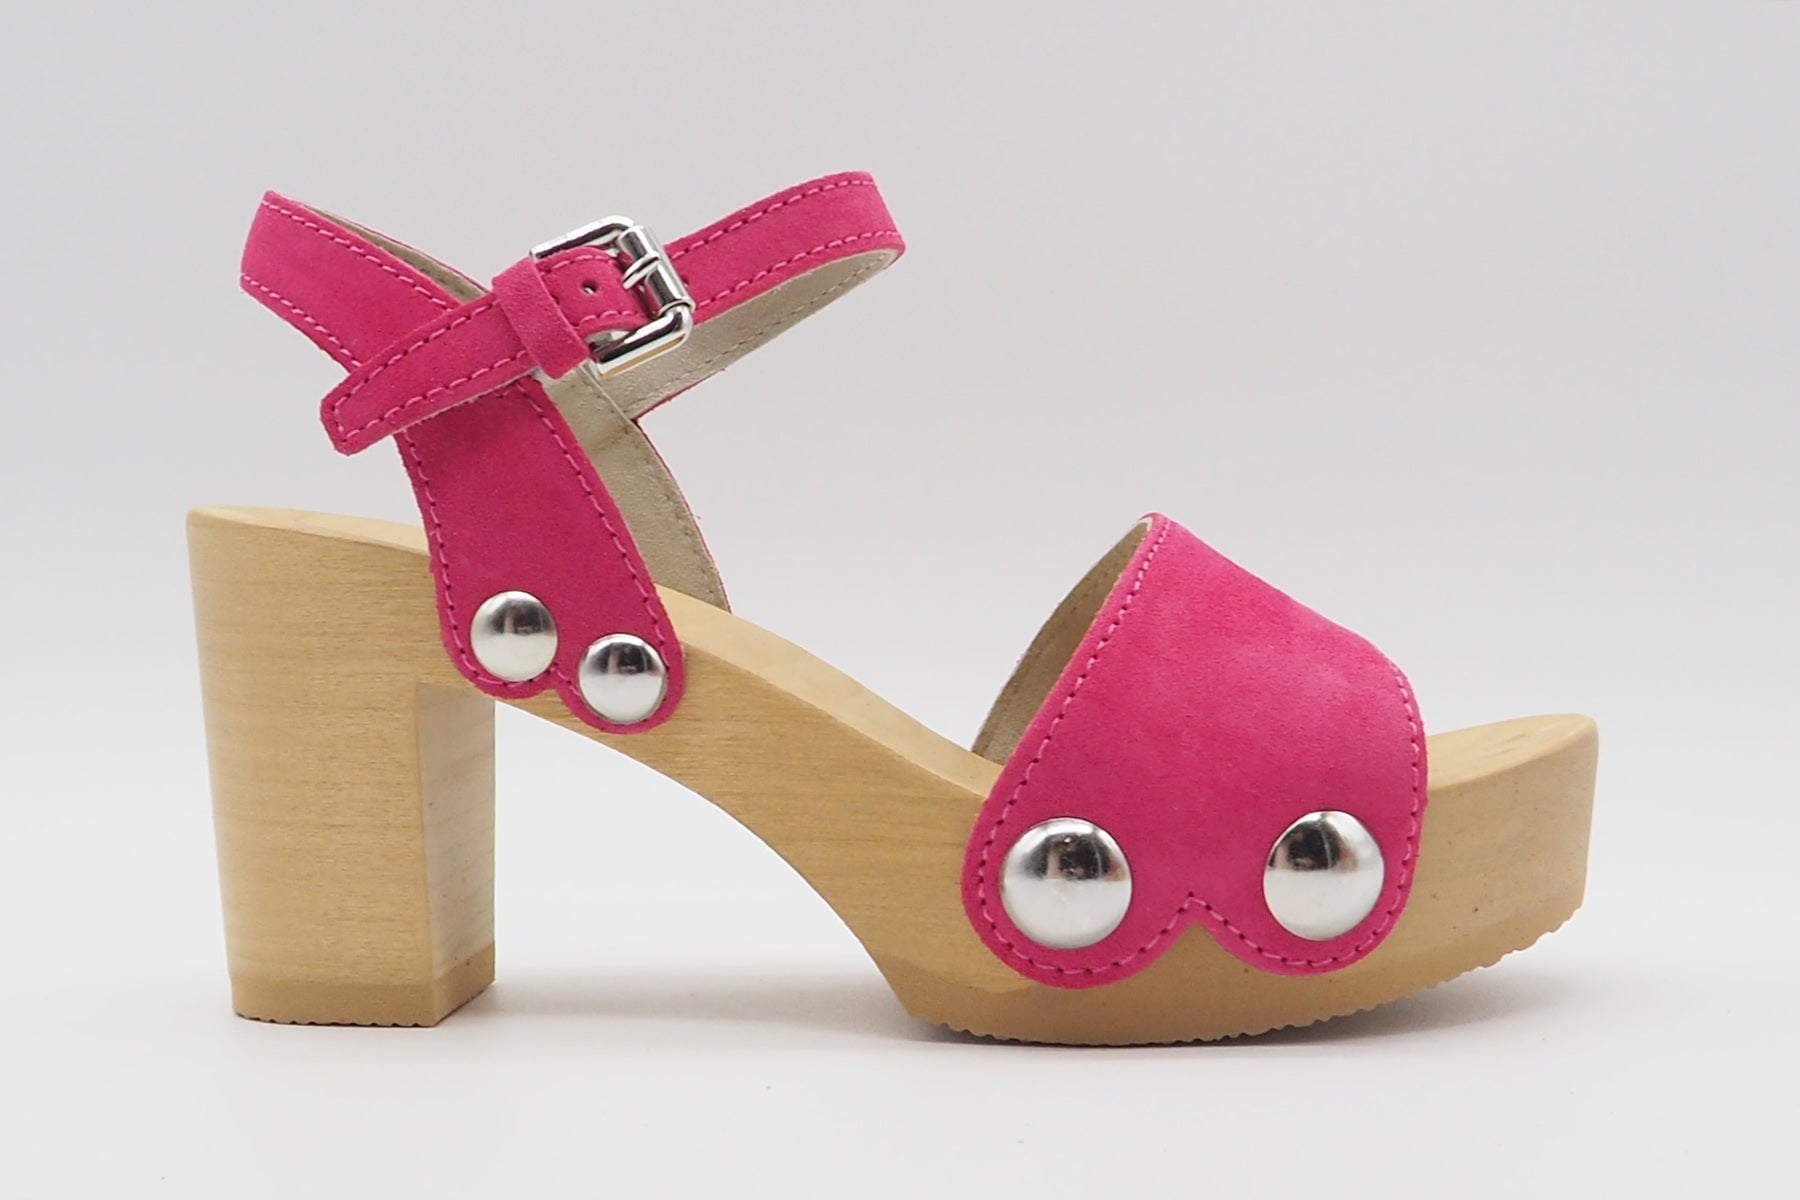 Feine Damen Sandalen aus Veloursleder in Pink - Absatz 8cm - Eilyn Damen Sandalen Softclox 